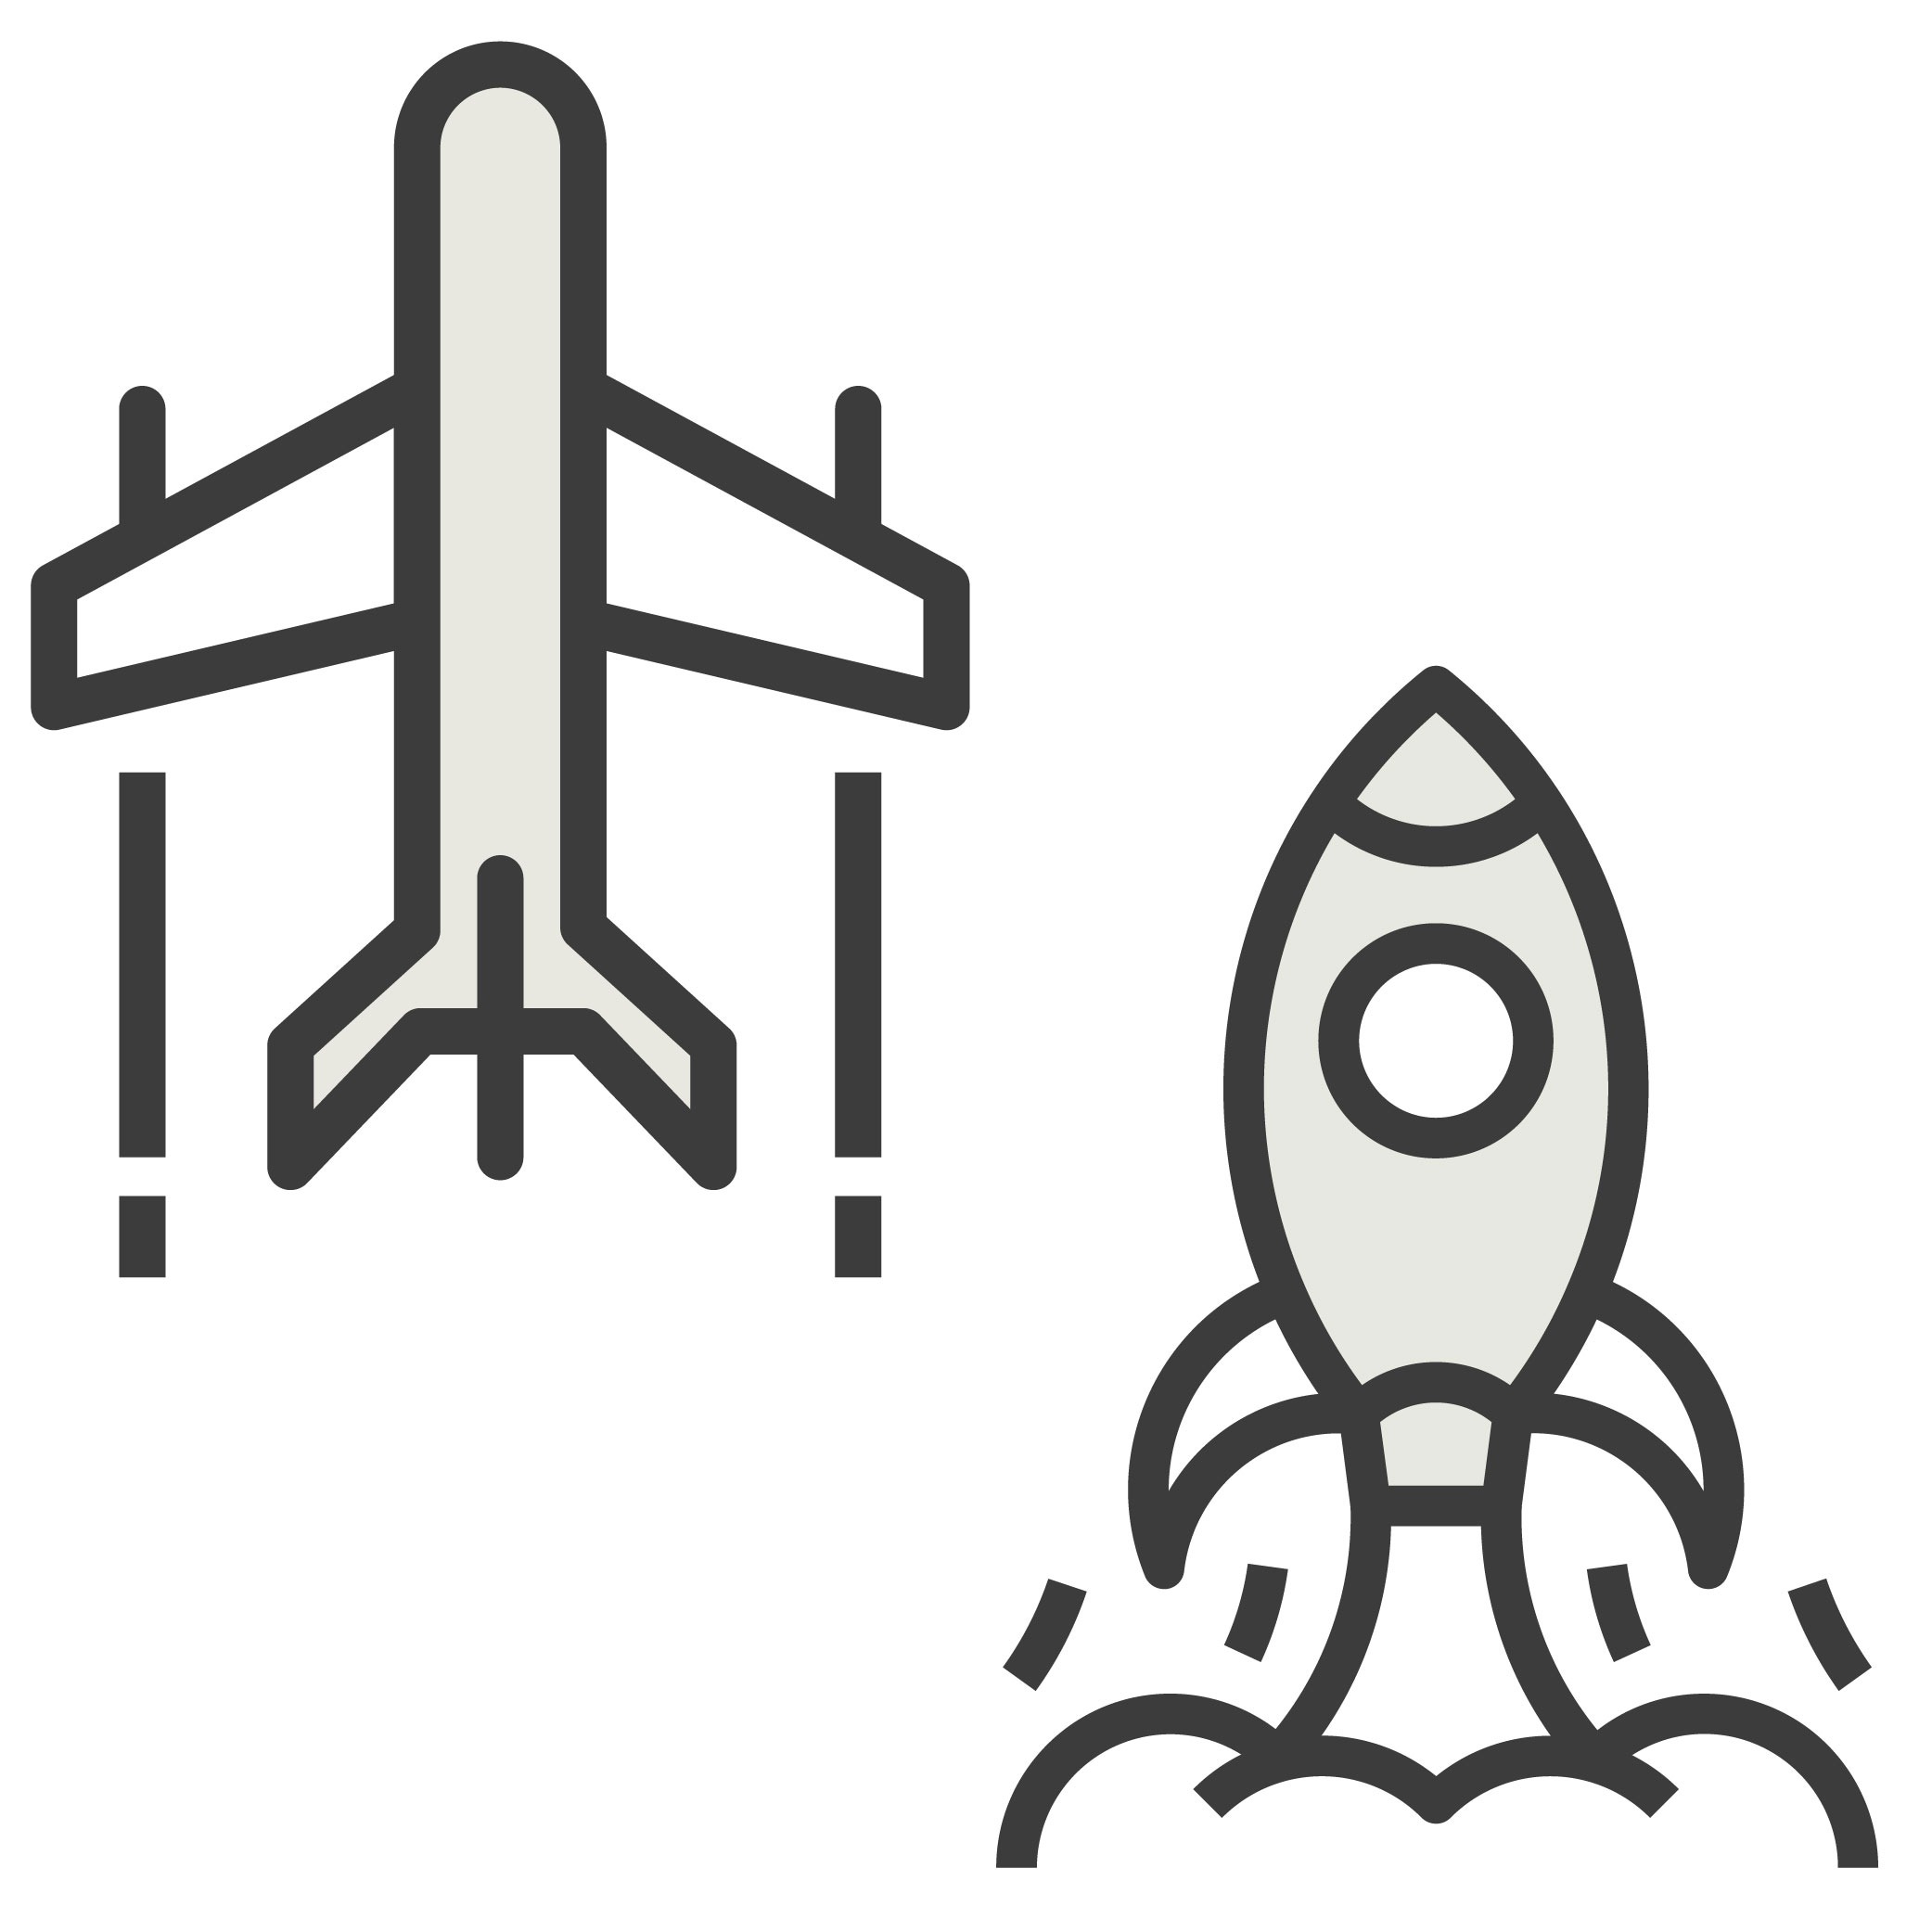 Aerospace industry icon